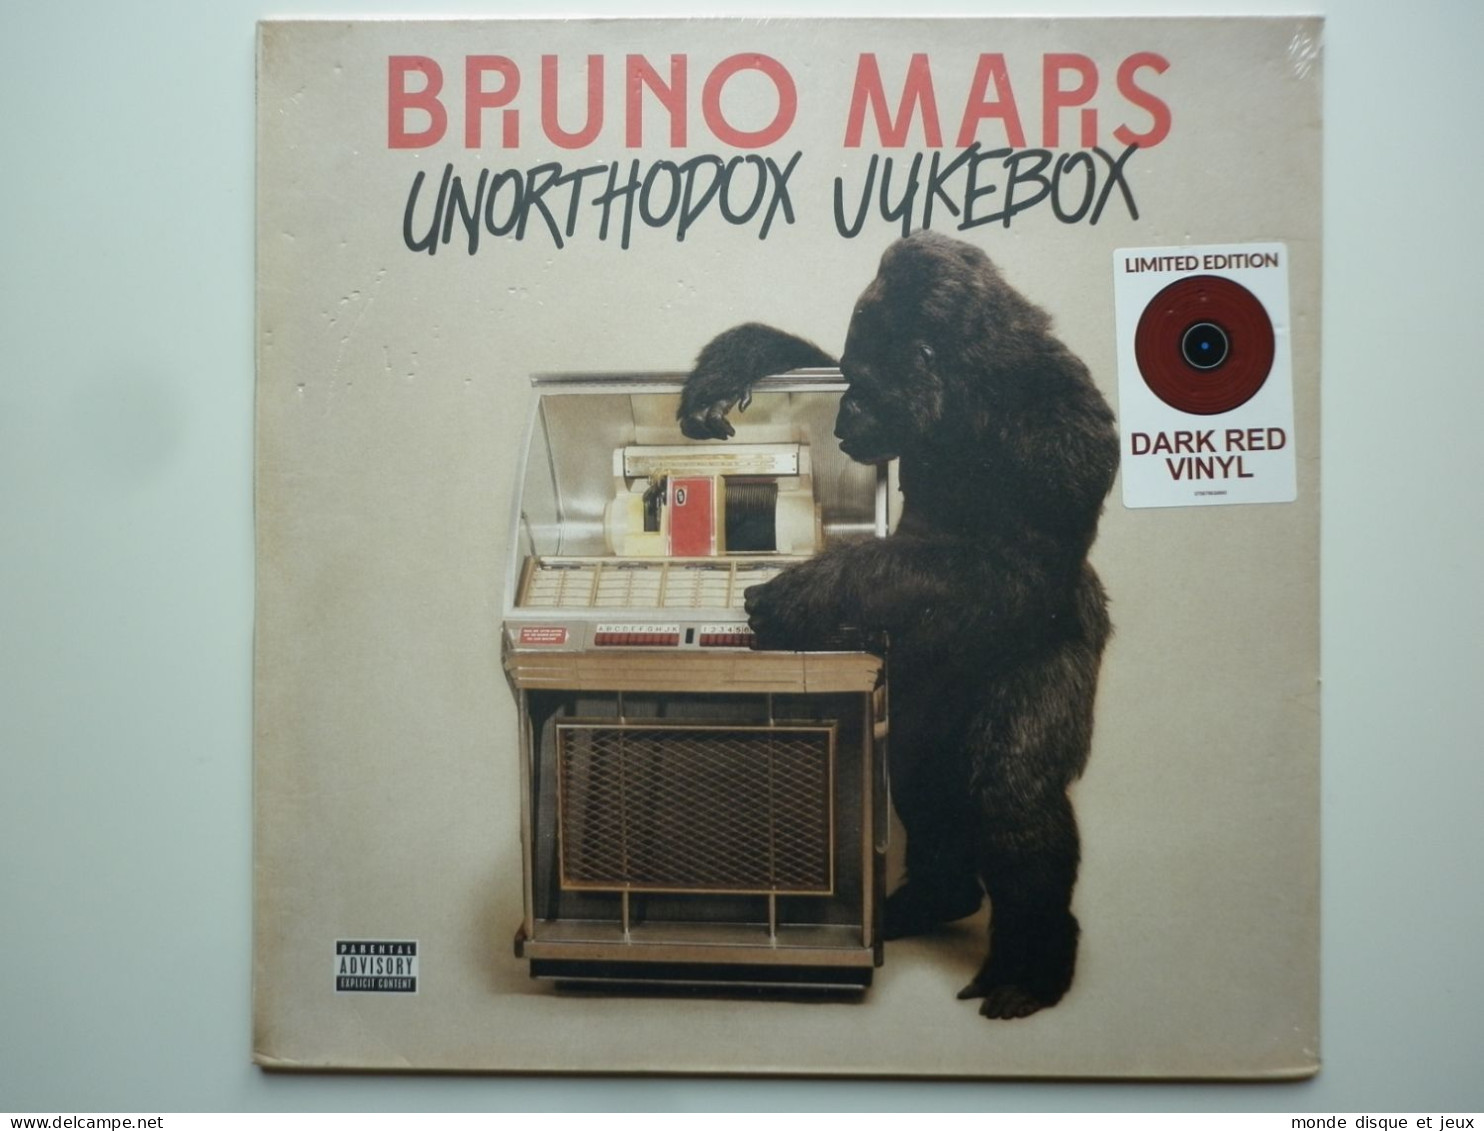 Bruno Mars Album 33Tours Vinyle Unorthodox Jukebox Couleur Rouge / Red - Otros - Canción Francesa